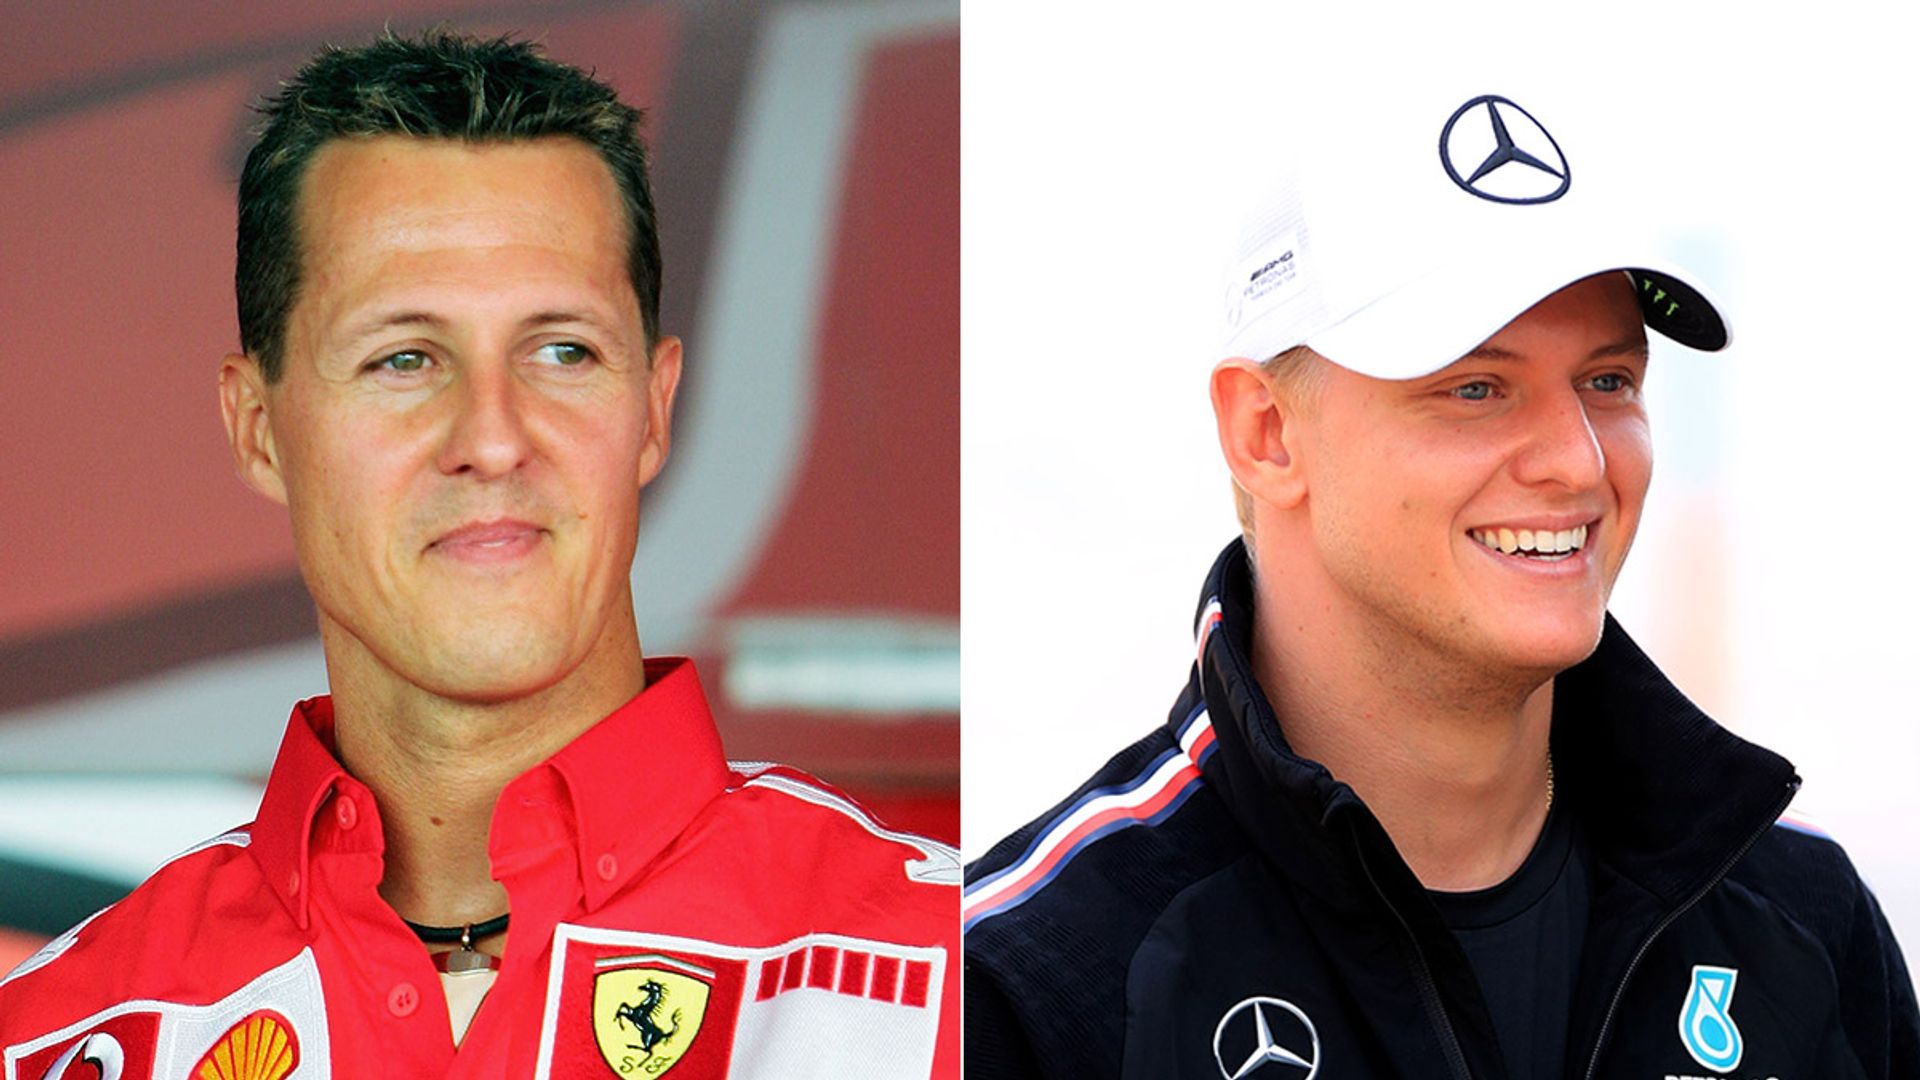 Michael Schumacher and son Mick